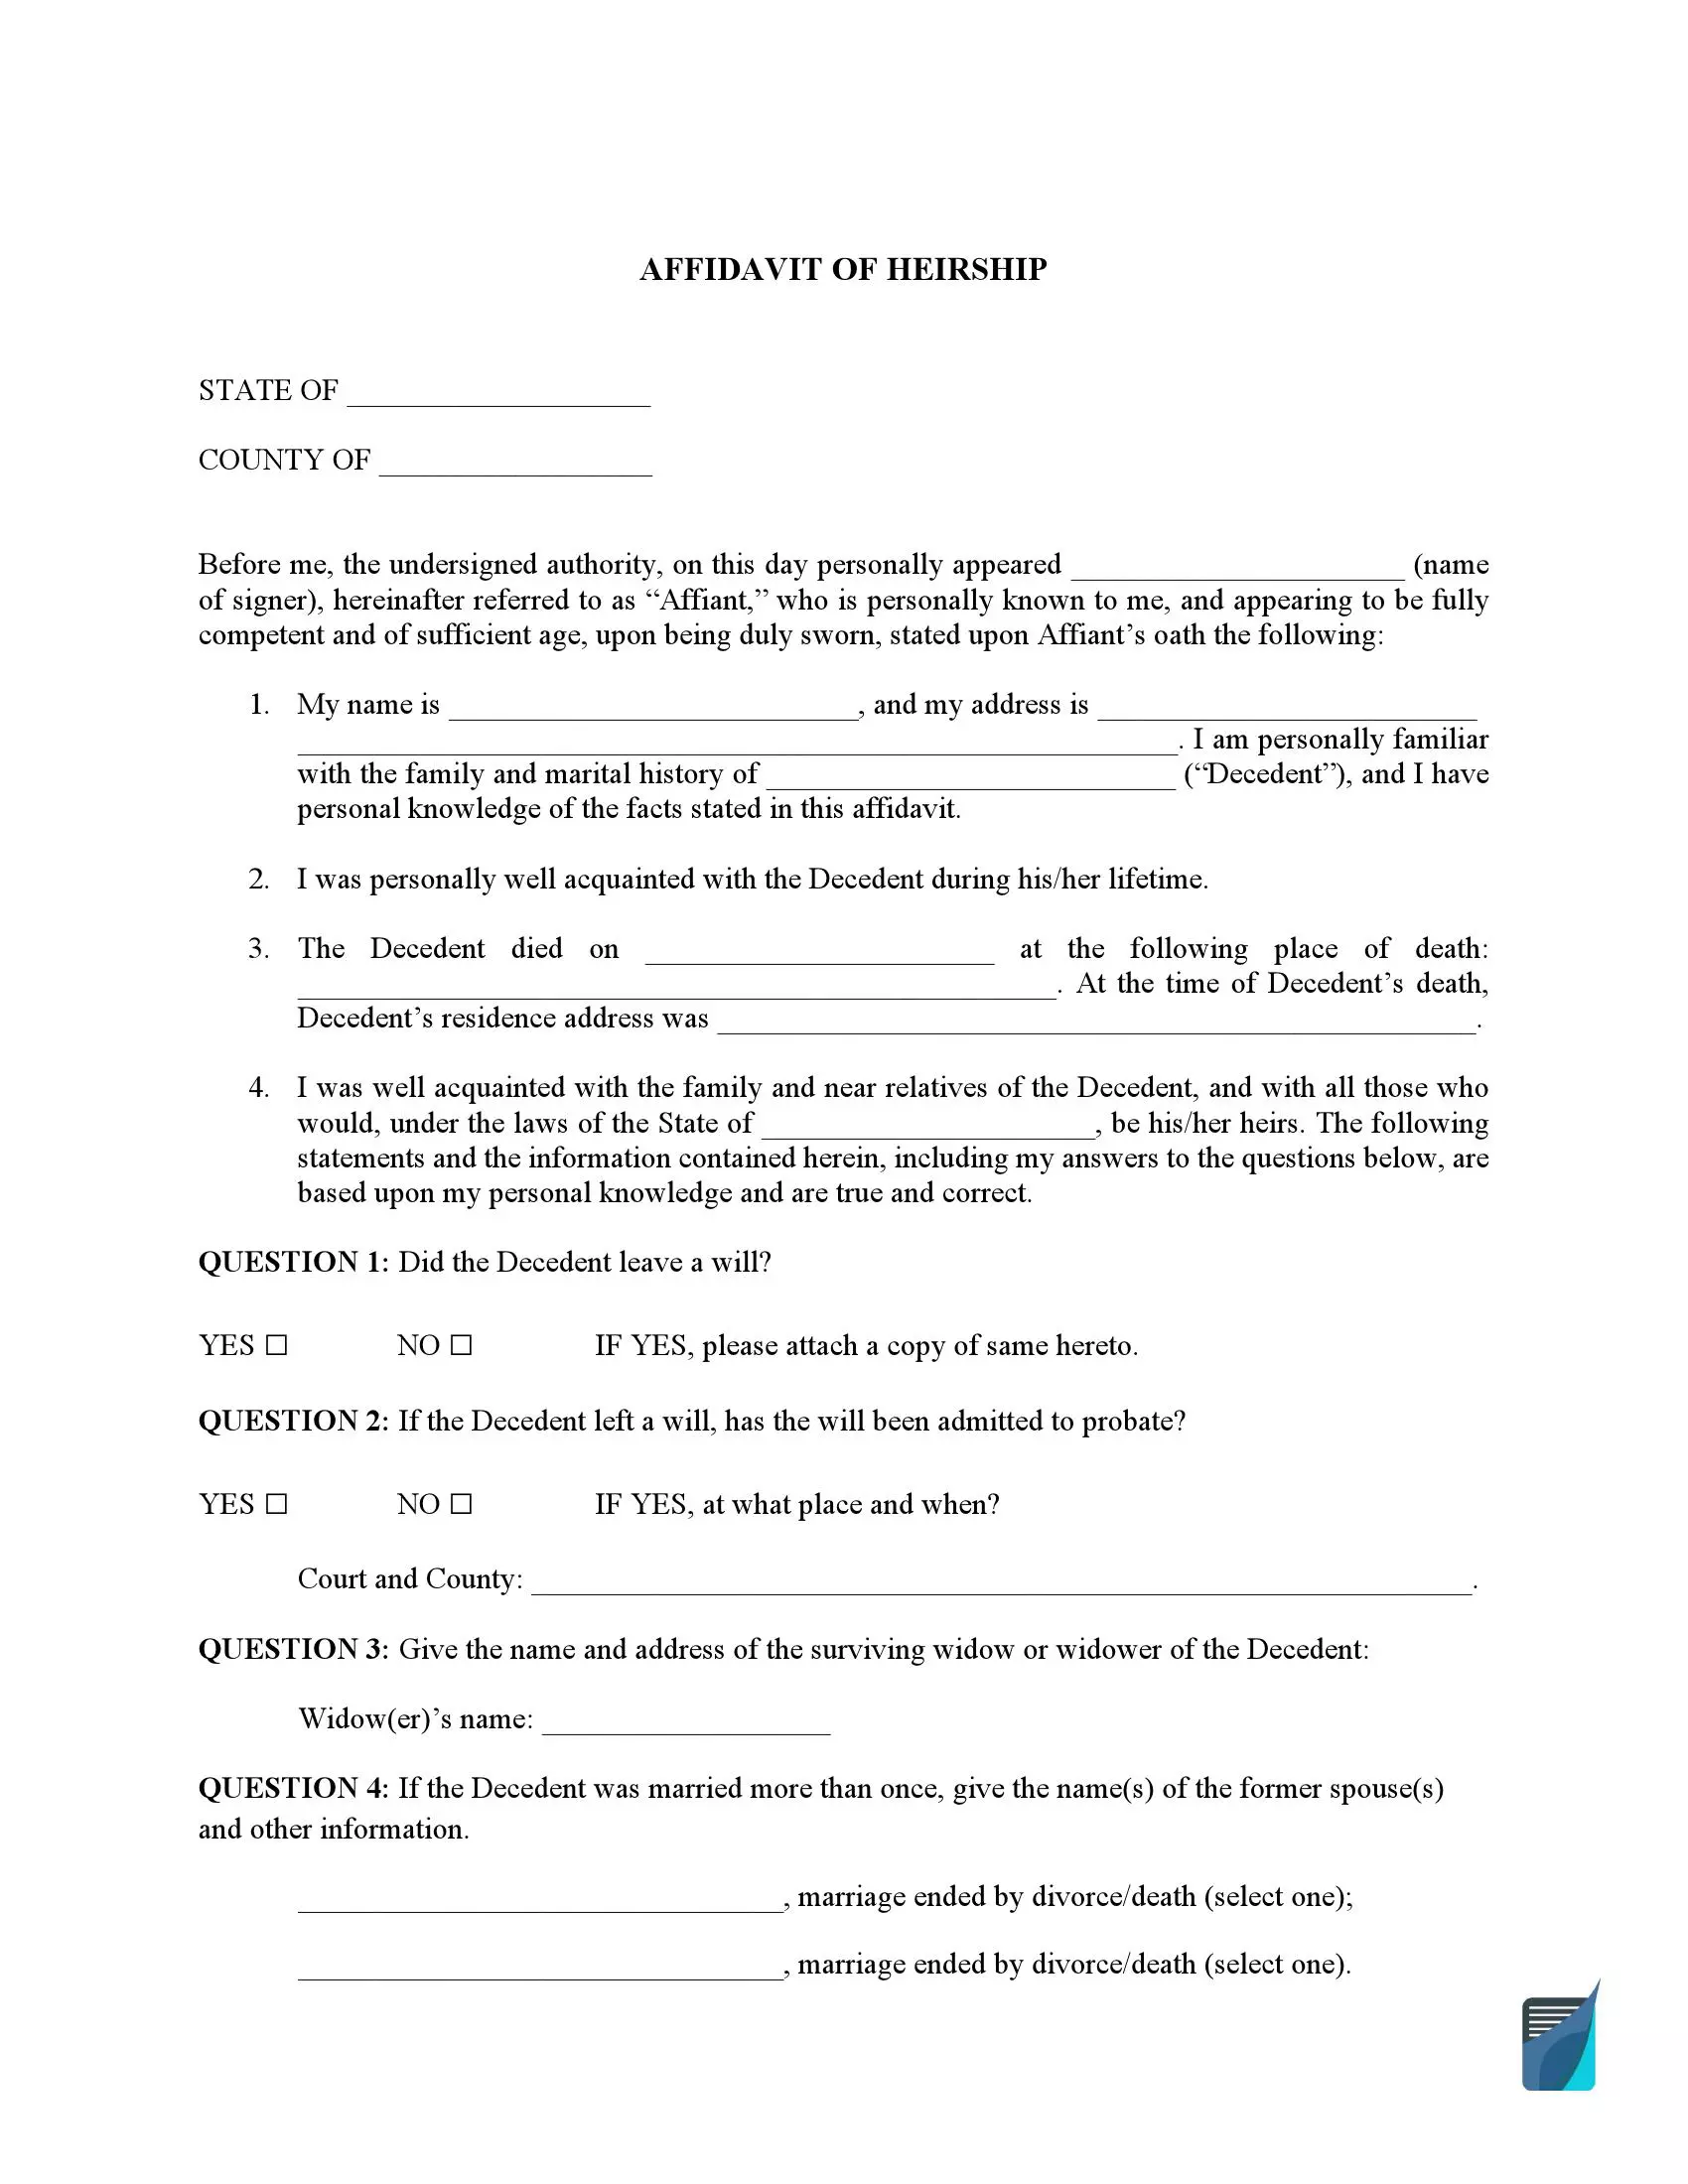 Affidavit of Heirship form-preview